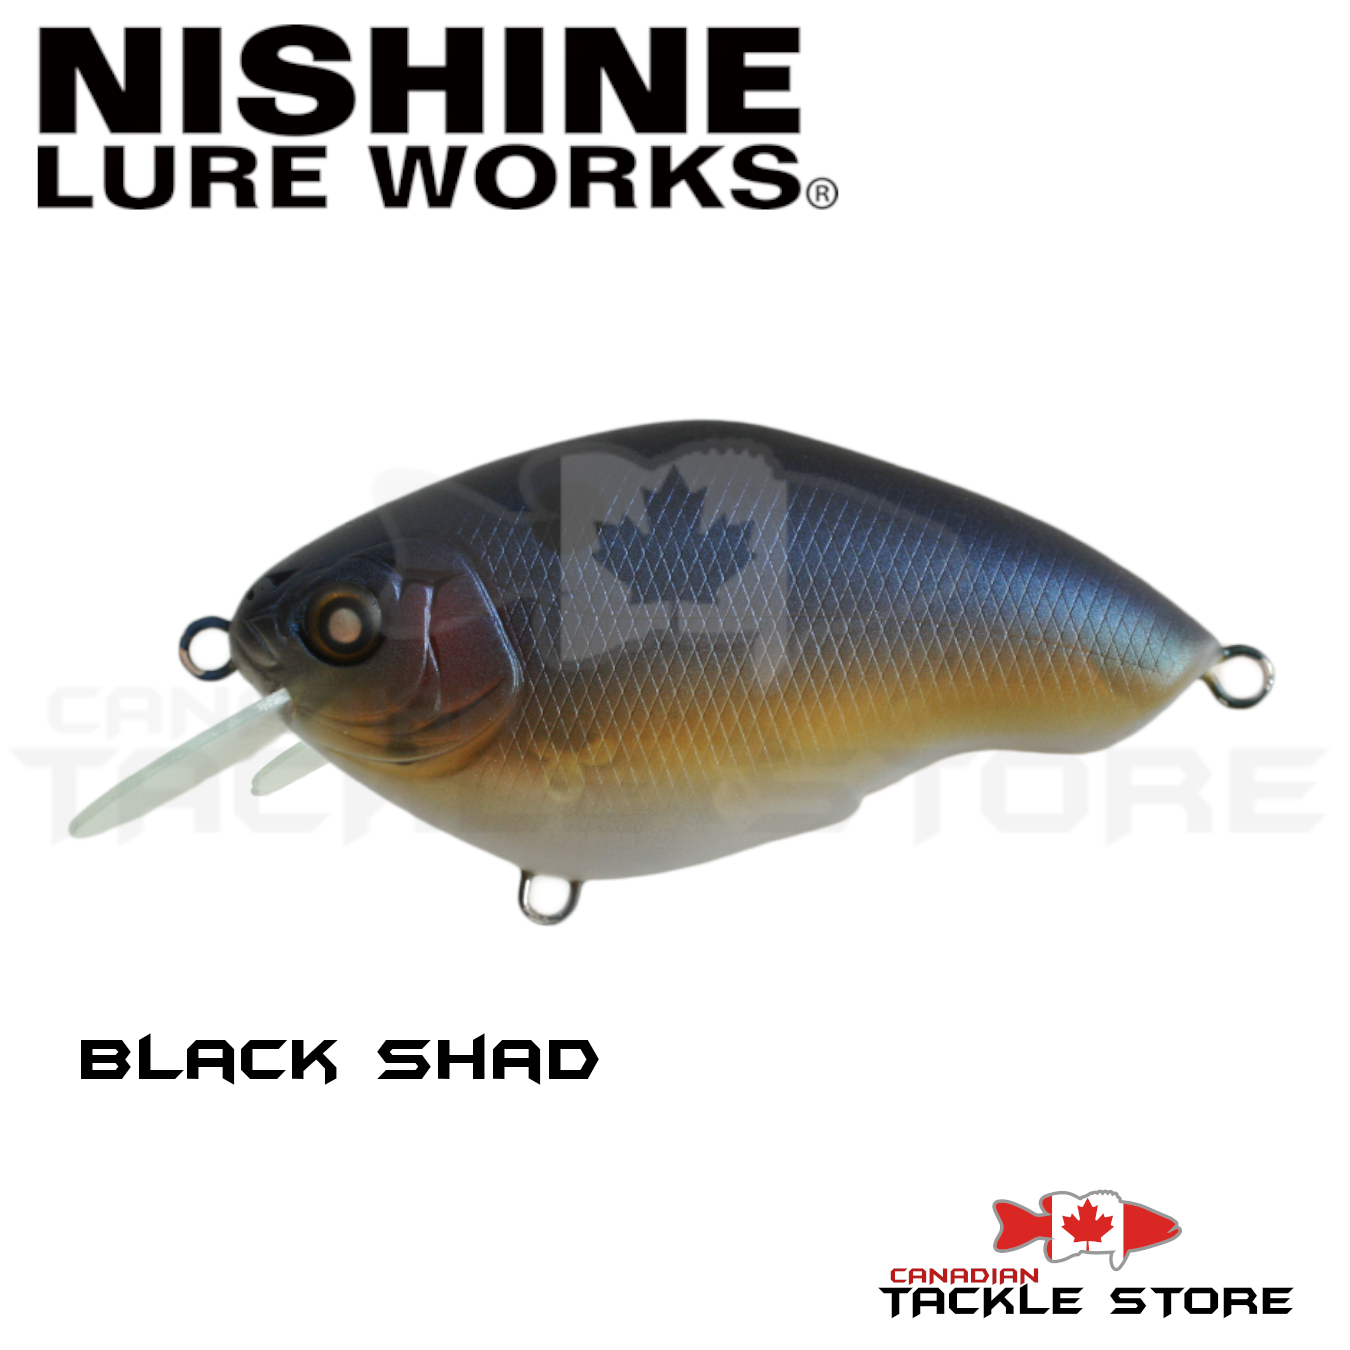 Nishine Lure Works Chippawa RB Silent Black Shad